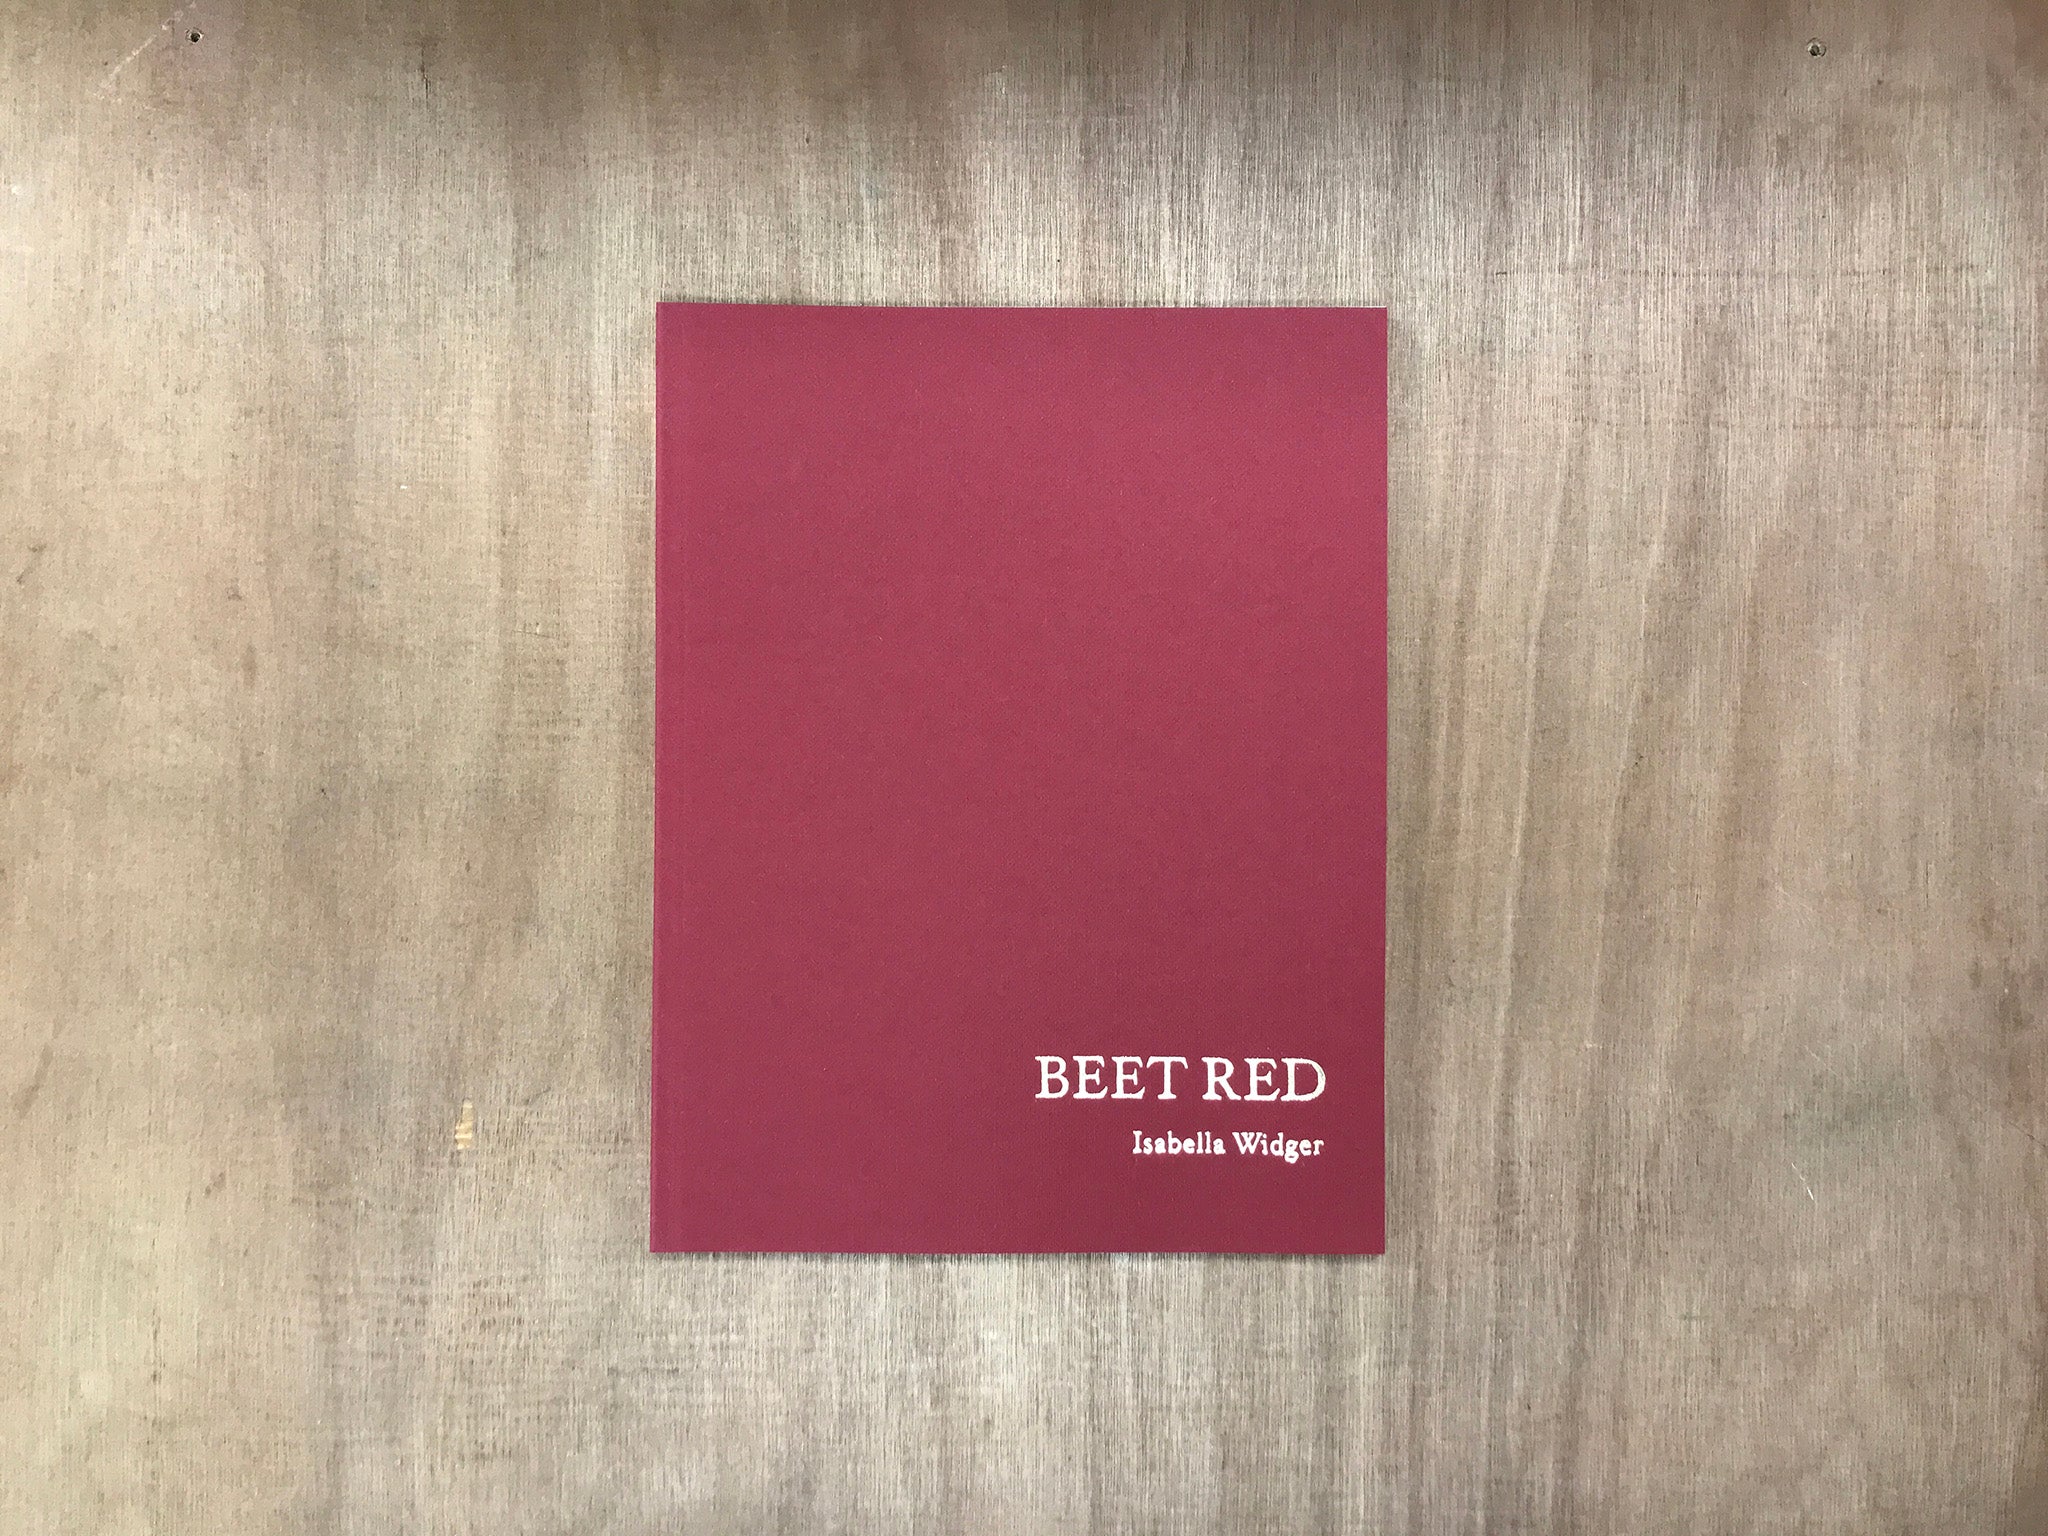 BEET RED by Isabella Widger